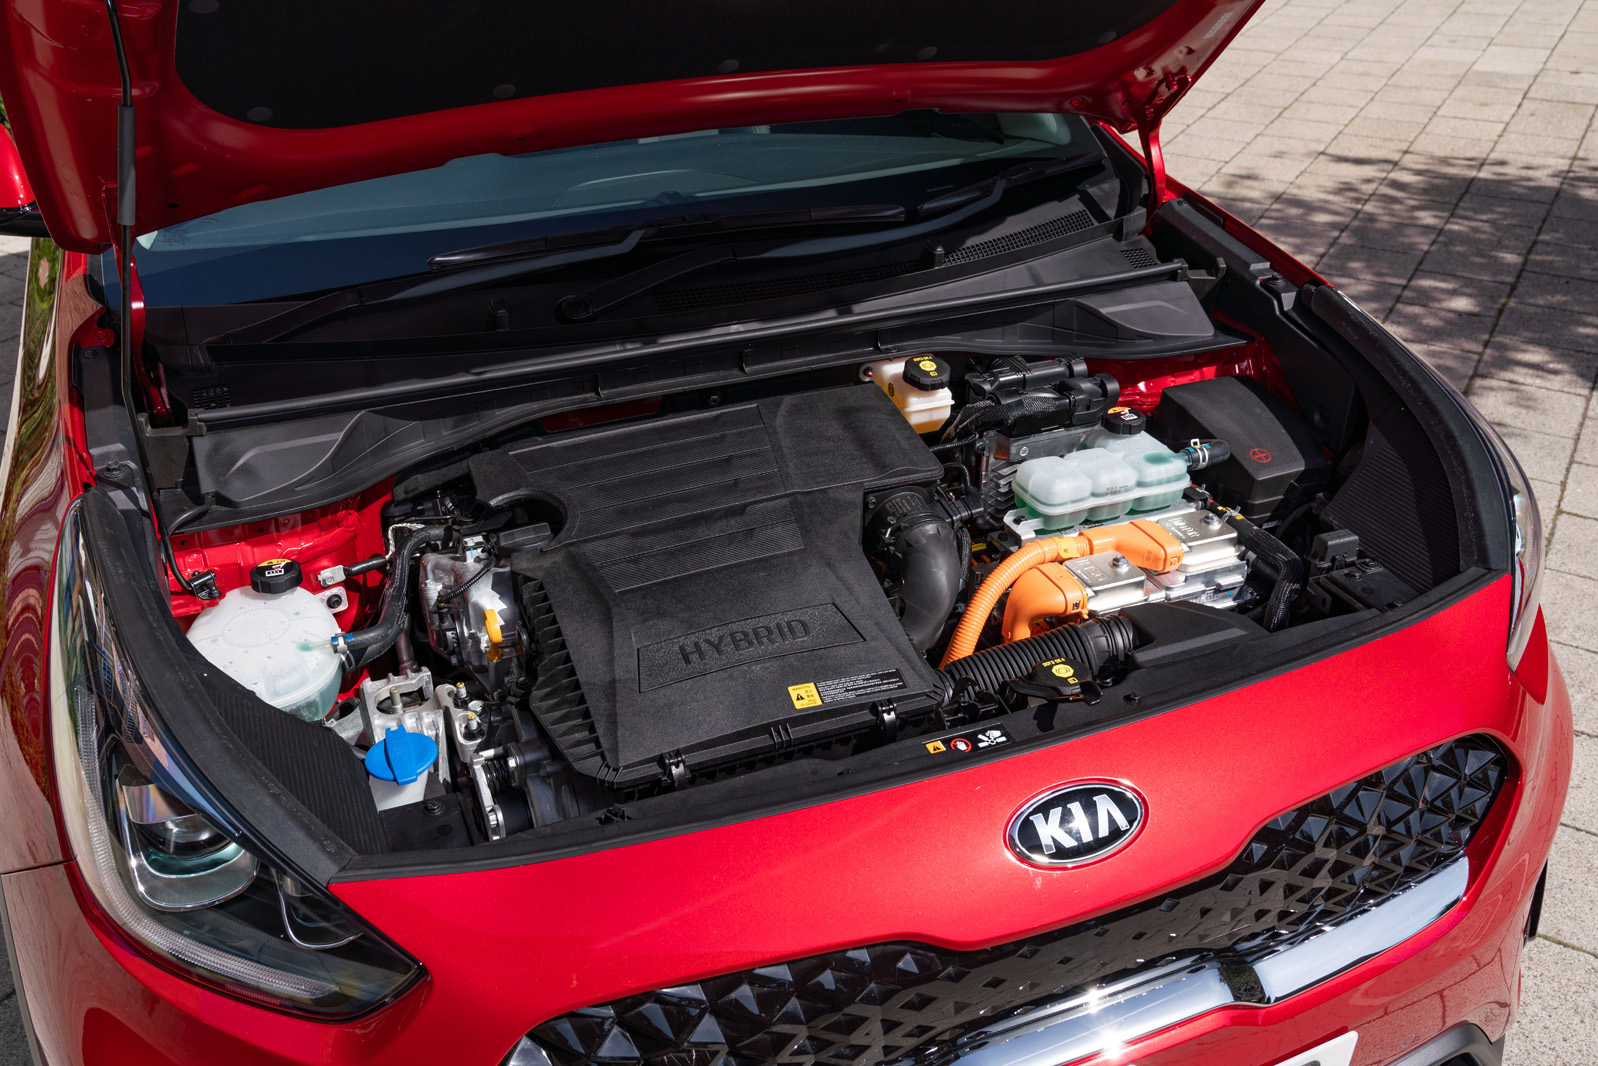 Kia Niro engines & | Autocar